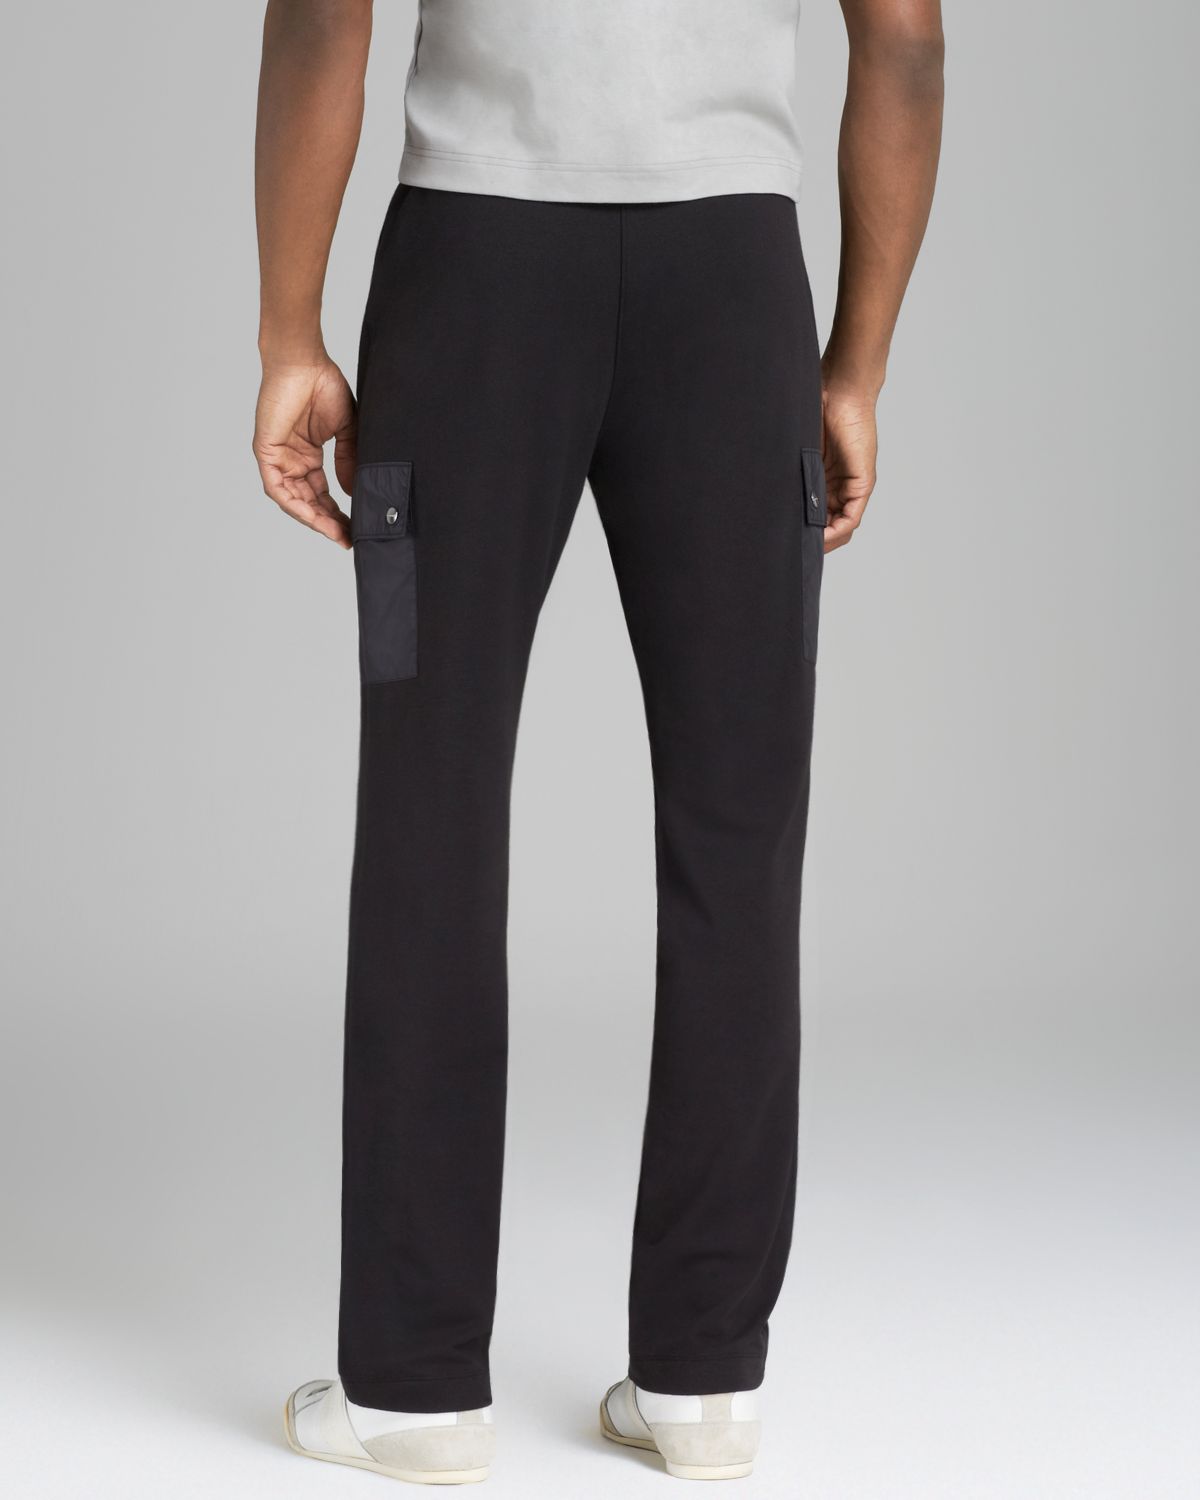 Michael Kors Cargo Pocket Knit Sweatpants in Black for Men - Lyst